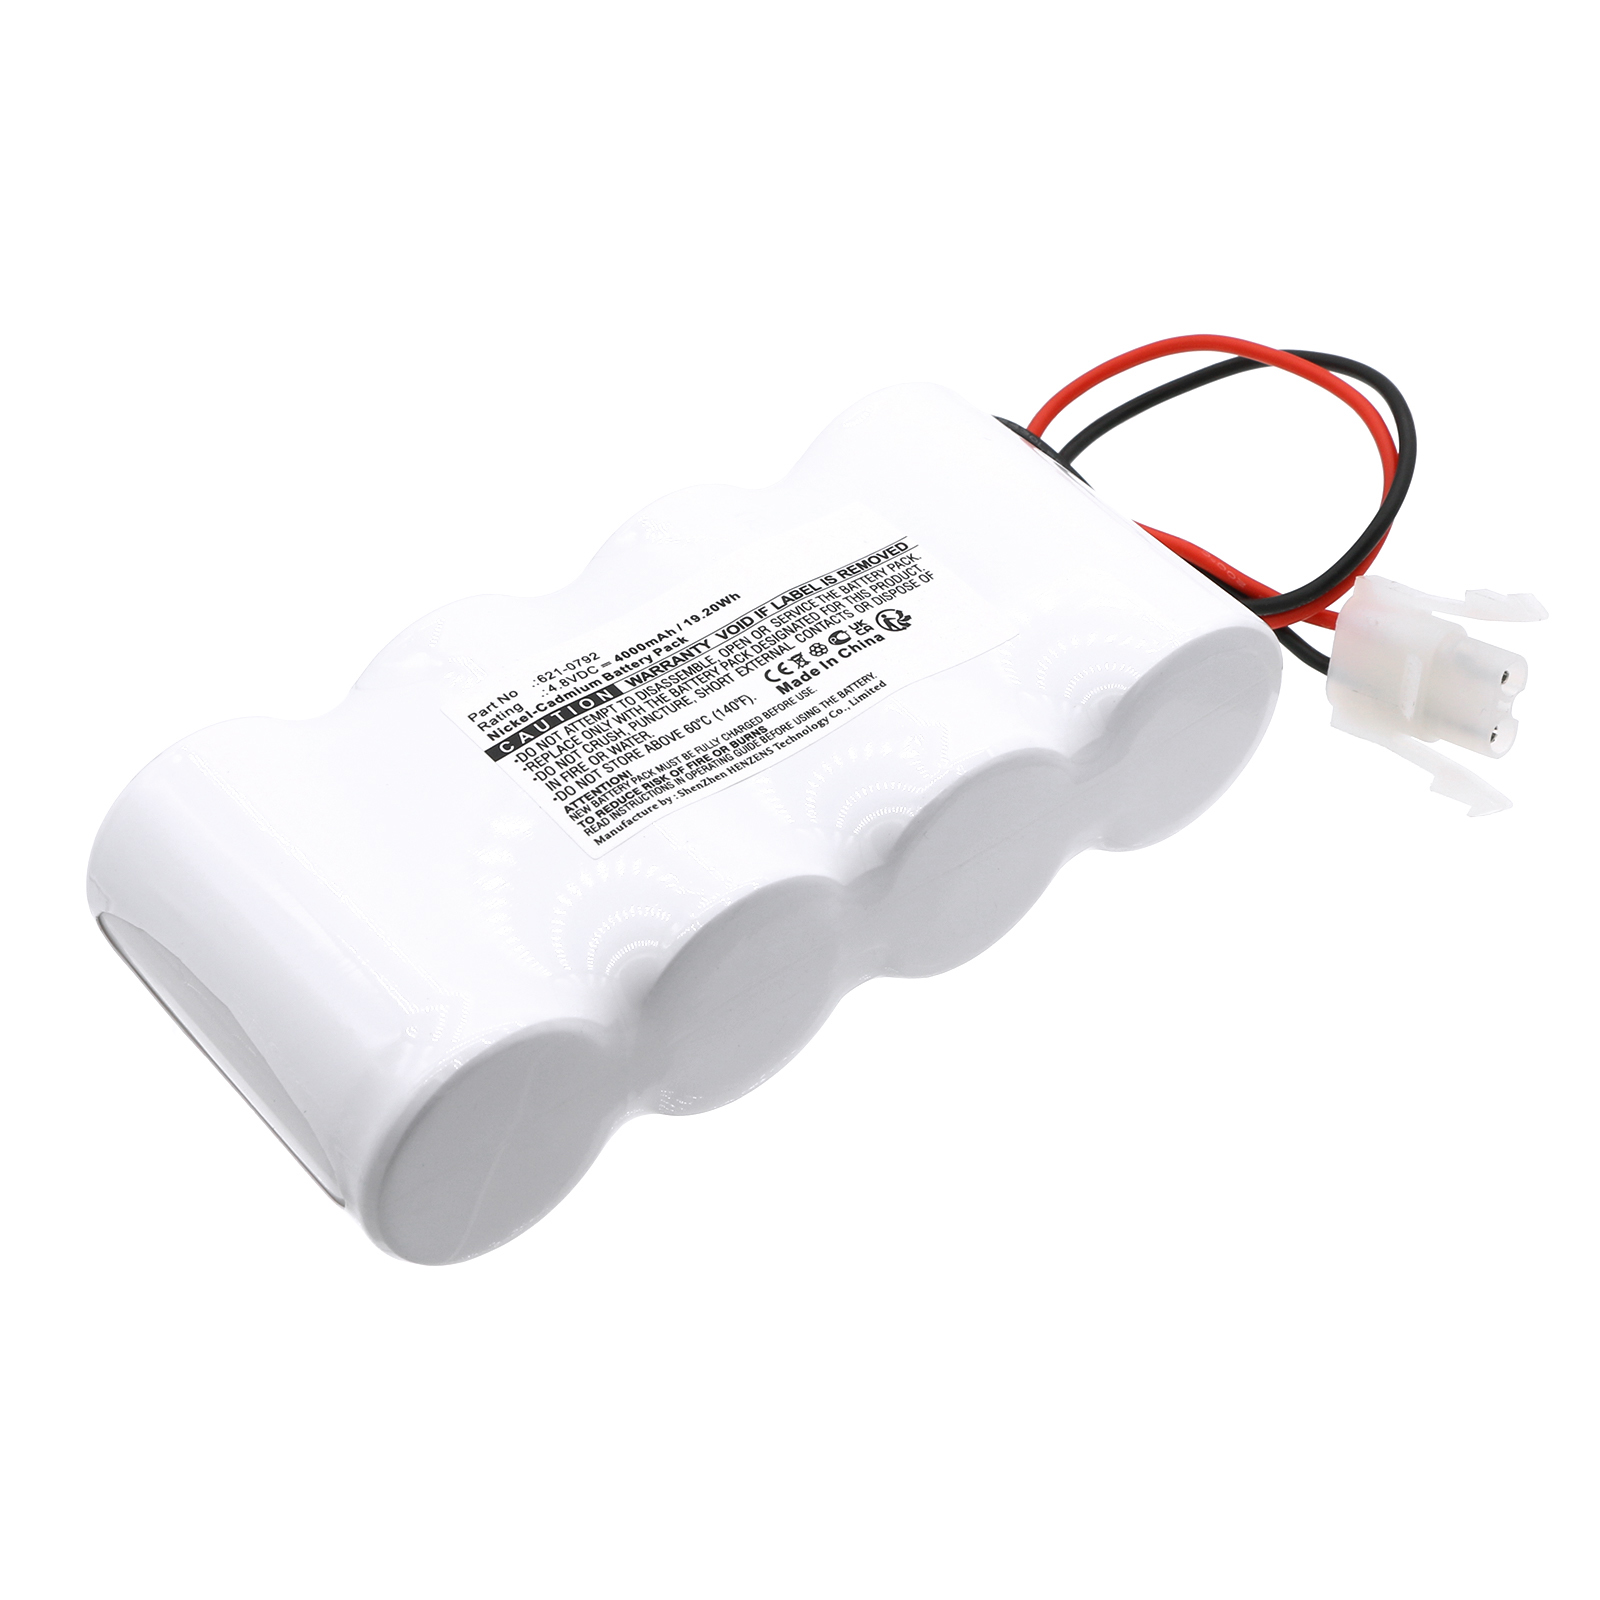 Synergy Digital Emergency Lighting Battery, Compatible with Lite-Plan 3409 Emergency Lighting Battery (Ni-CD, 4.8V, 4000mAh)